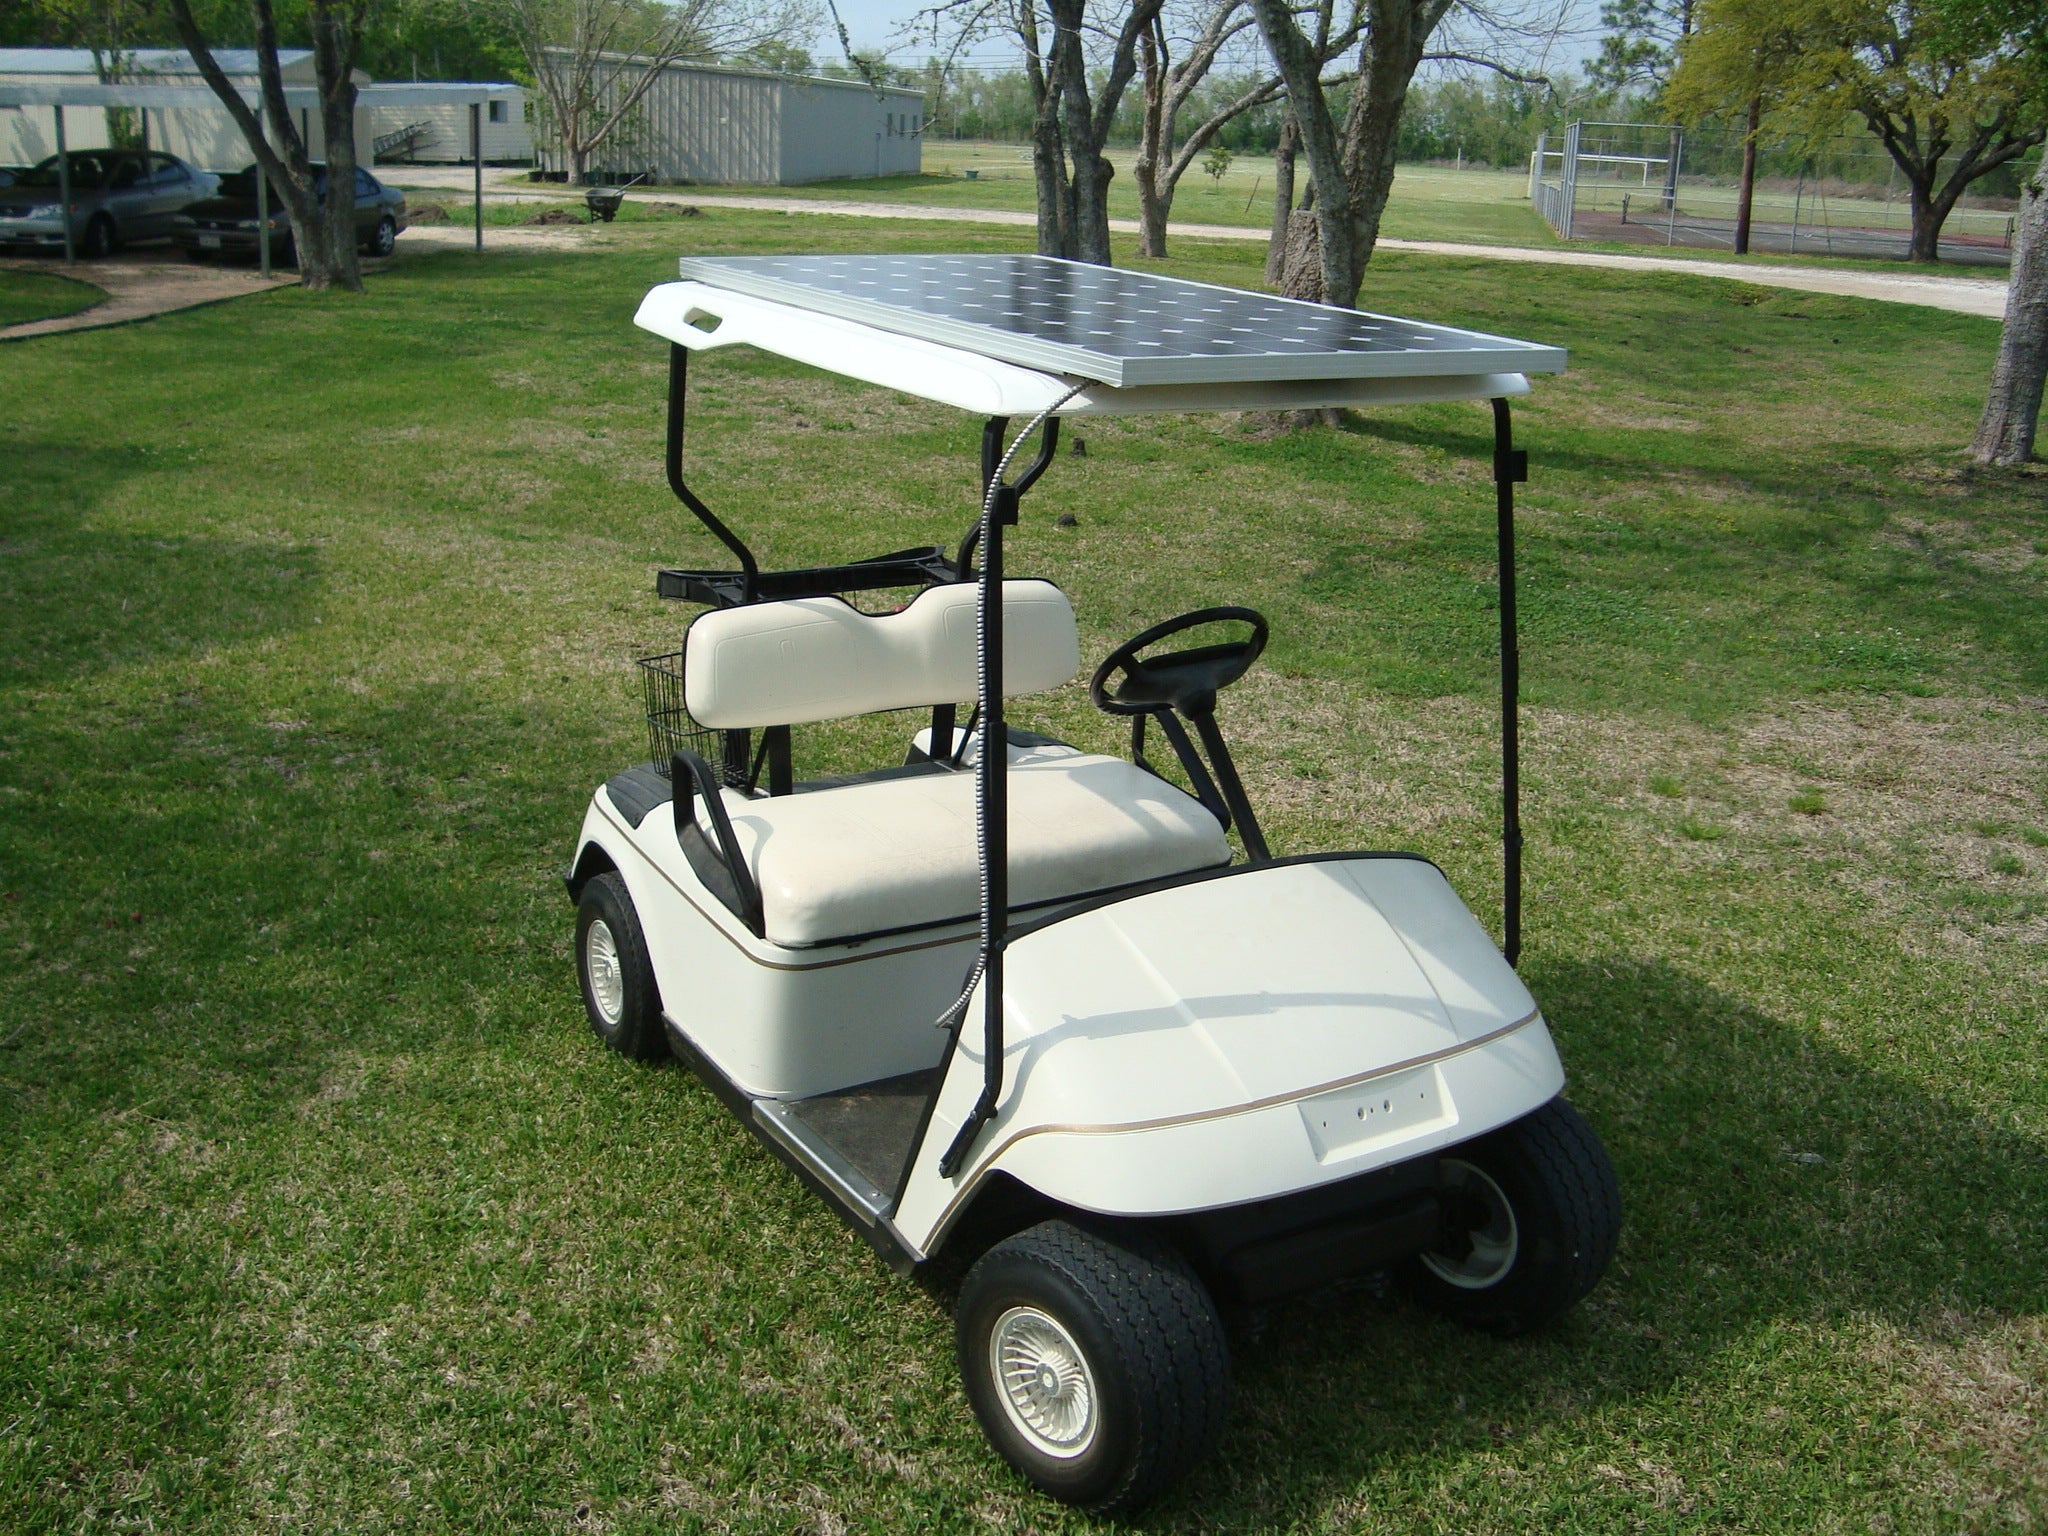 Club Car Golf Cart For Sale - - Pelican Parts Forums